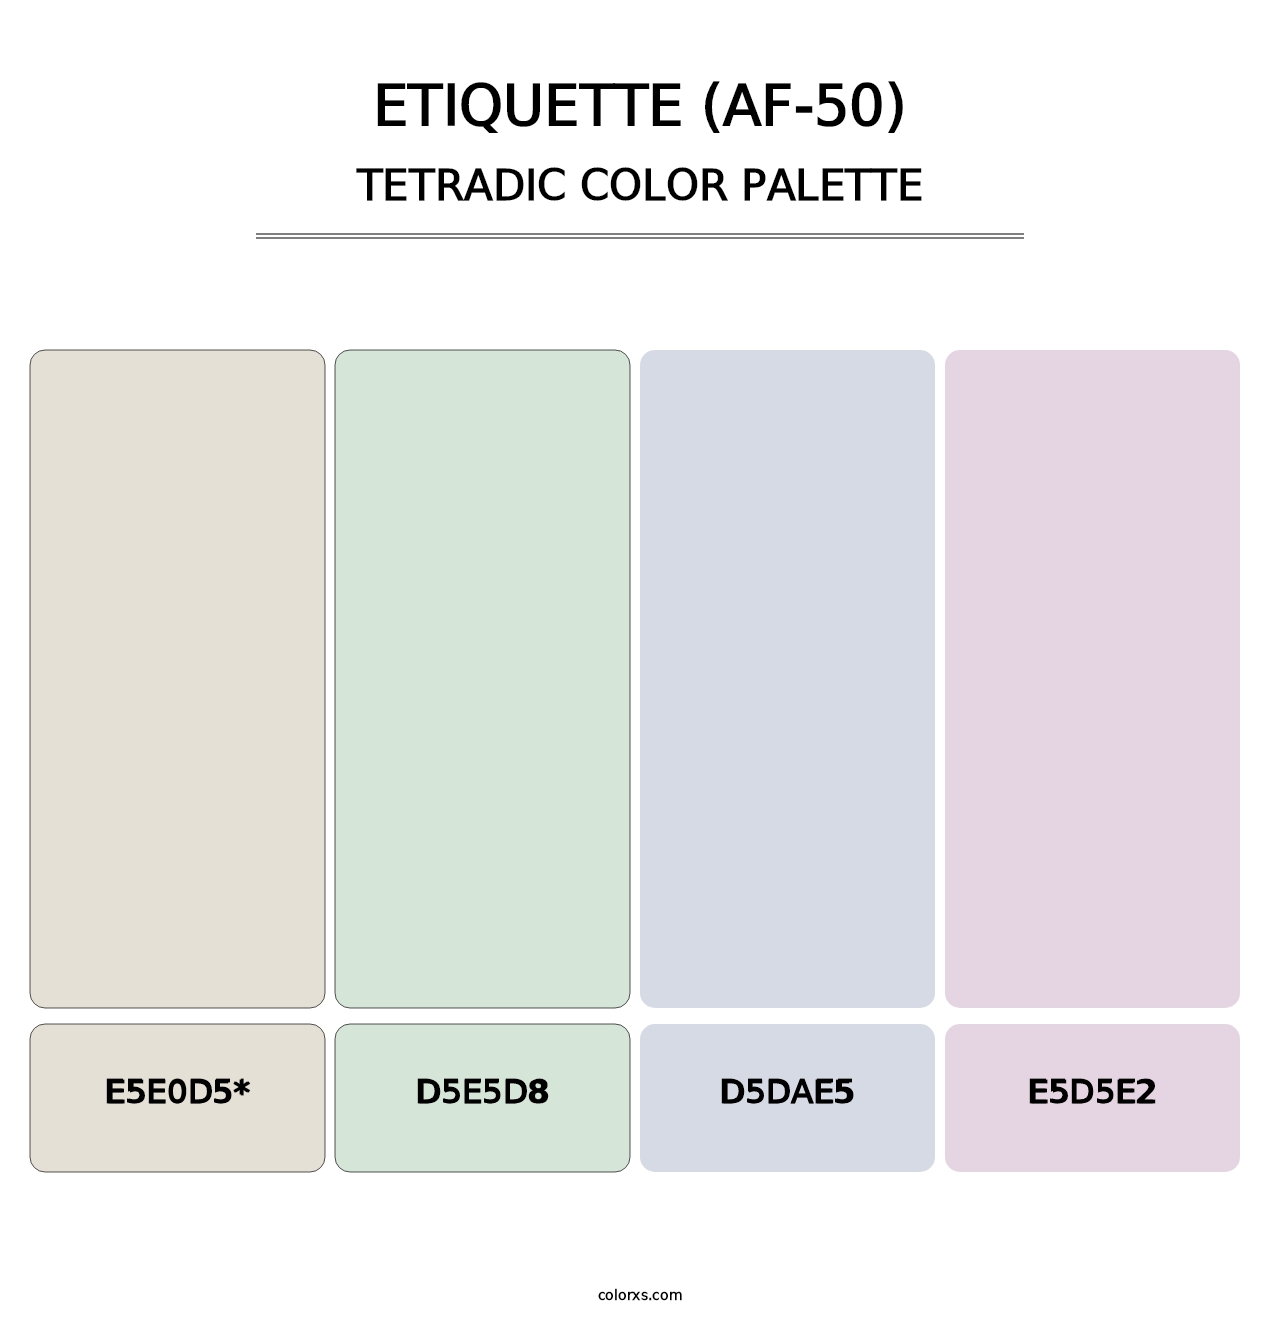 Etiquette (AF-50) - Tetradic Color Palette